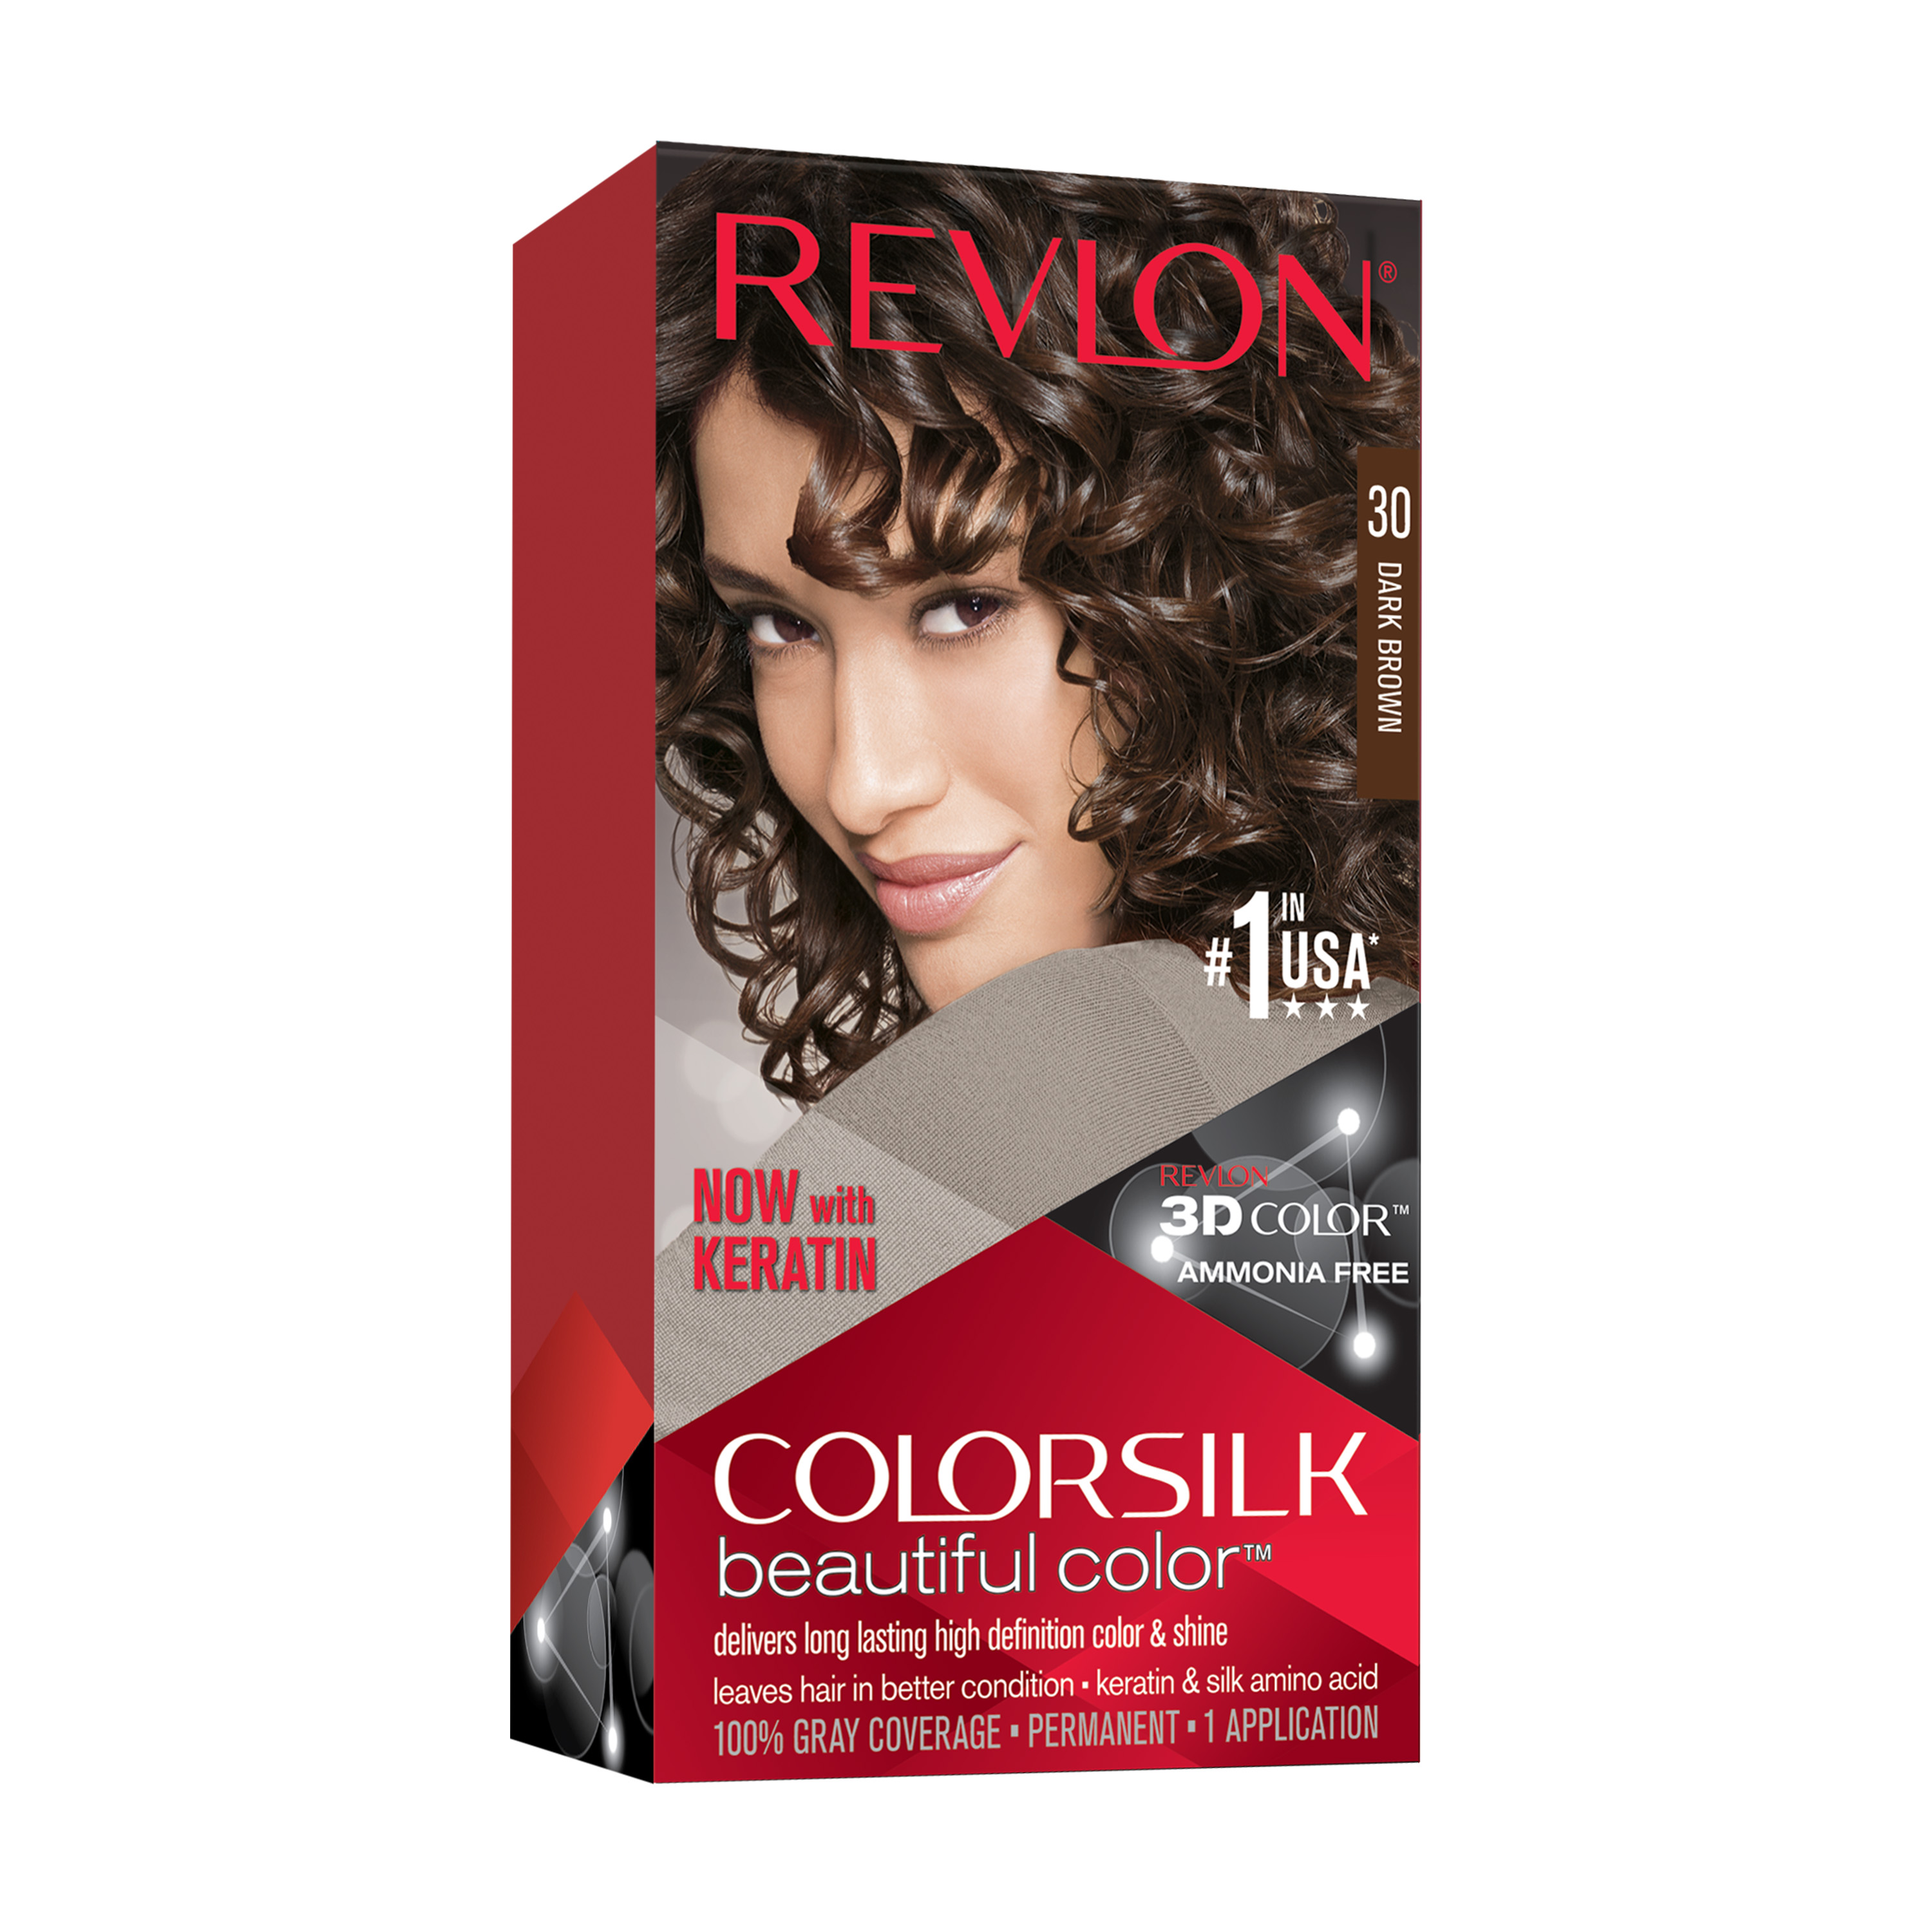 Revlon ColorSilk Beautiful Color Permanent Hair Color, 30 Dark Brown, 1 count - image 1 of 14